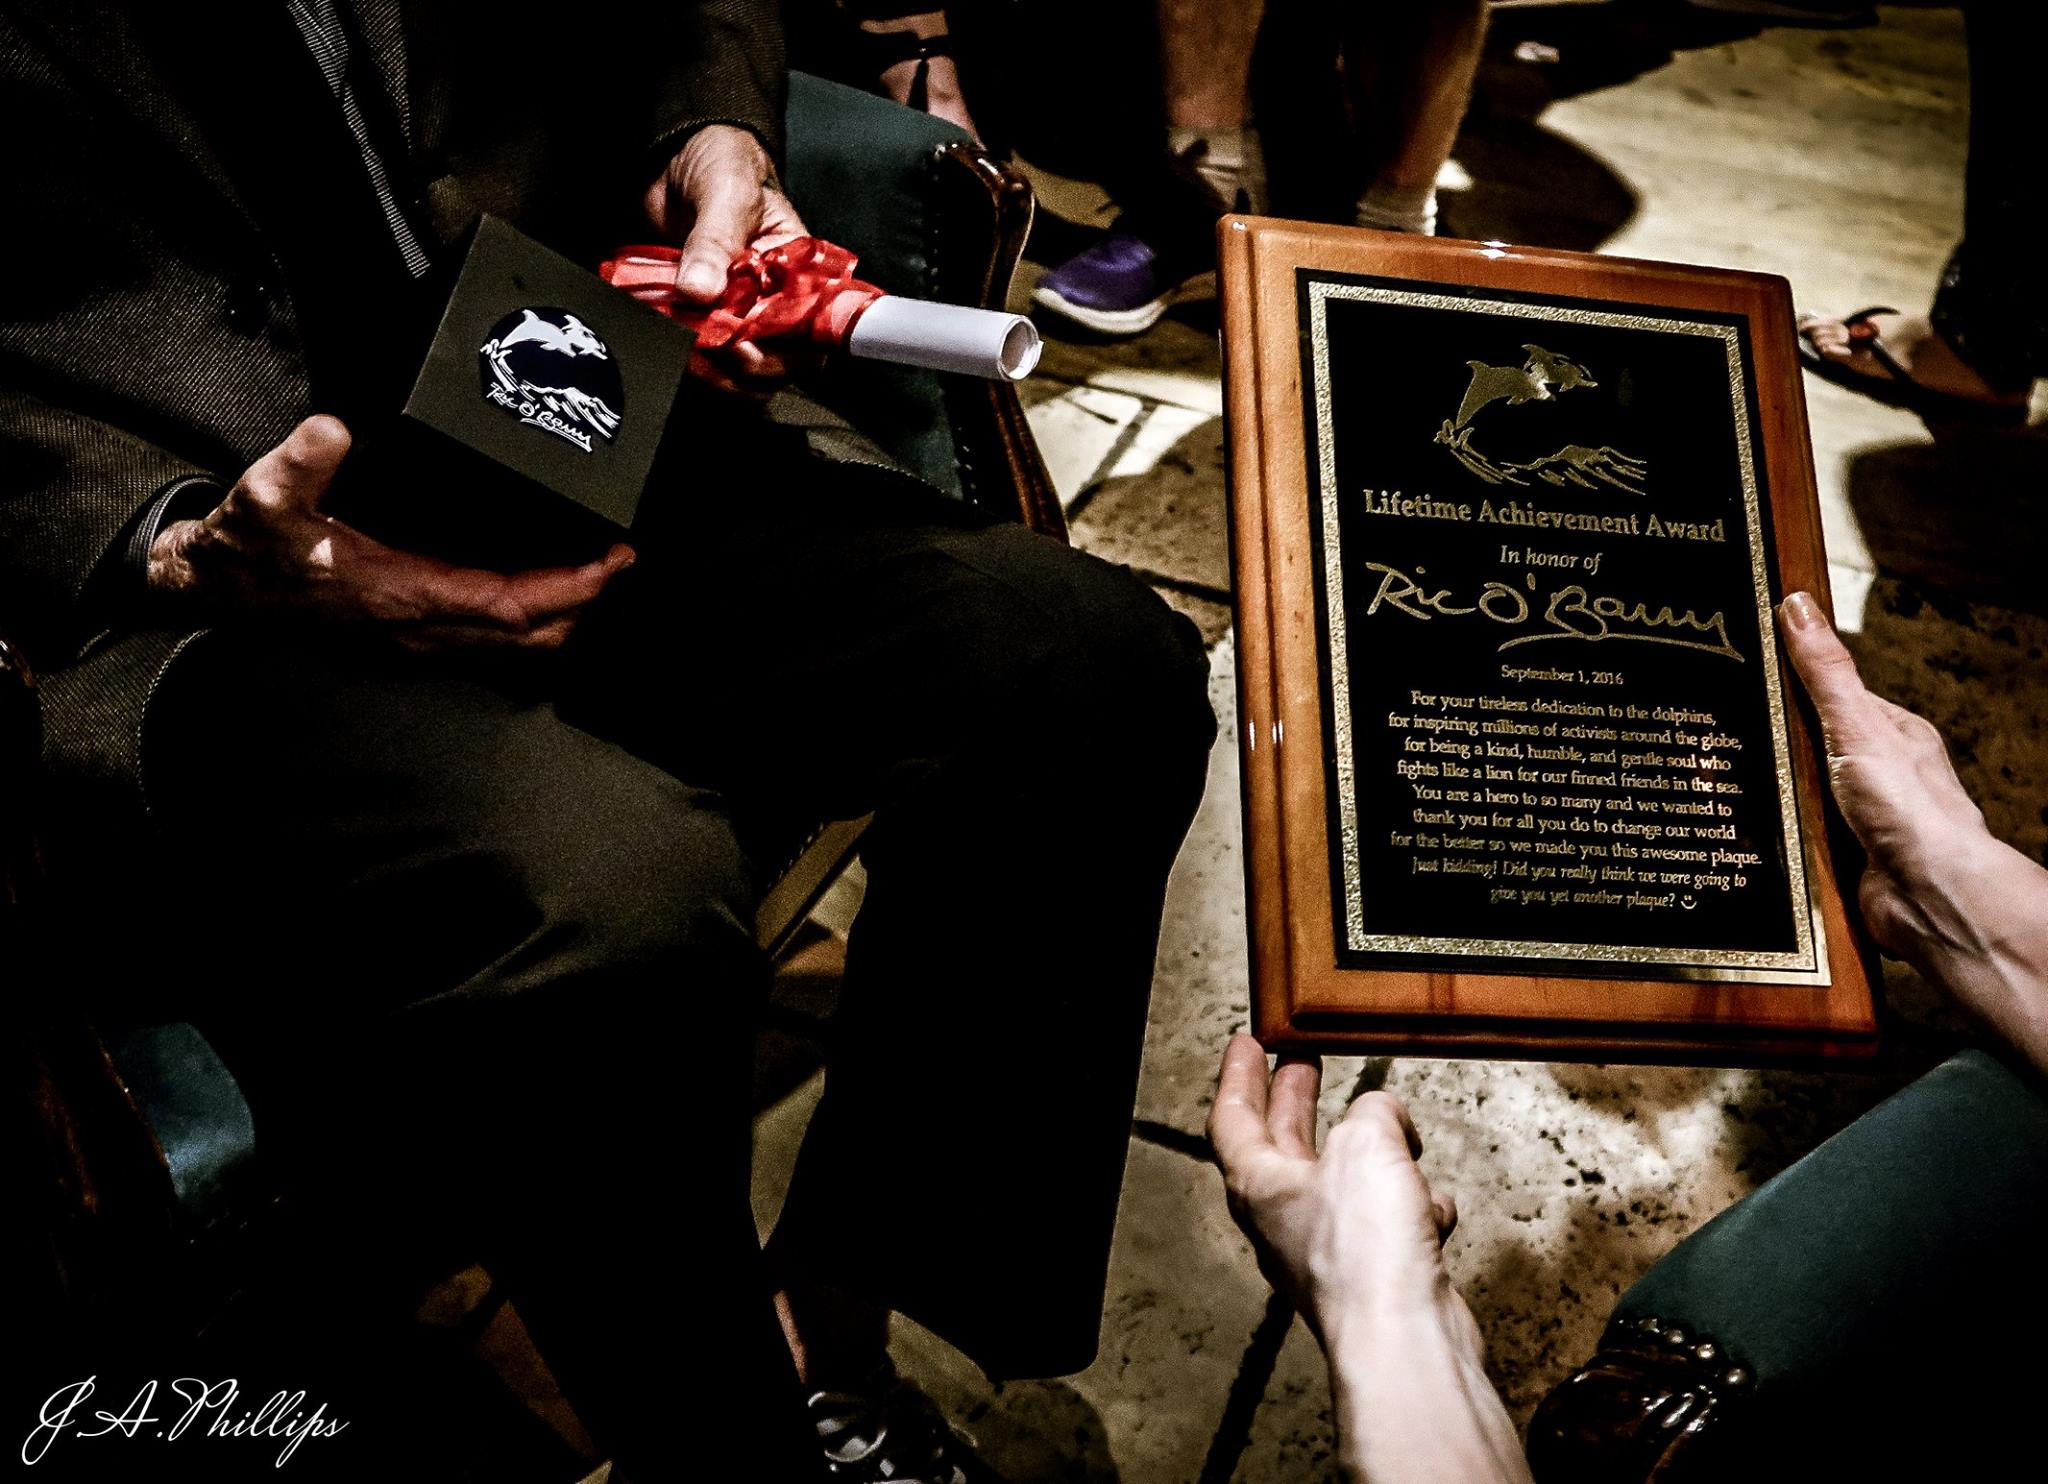 Ric O’Barry’s Lifetime Achievement Award